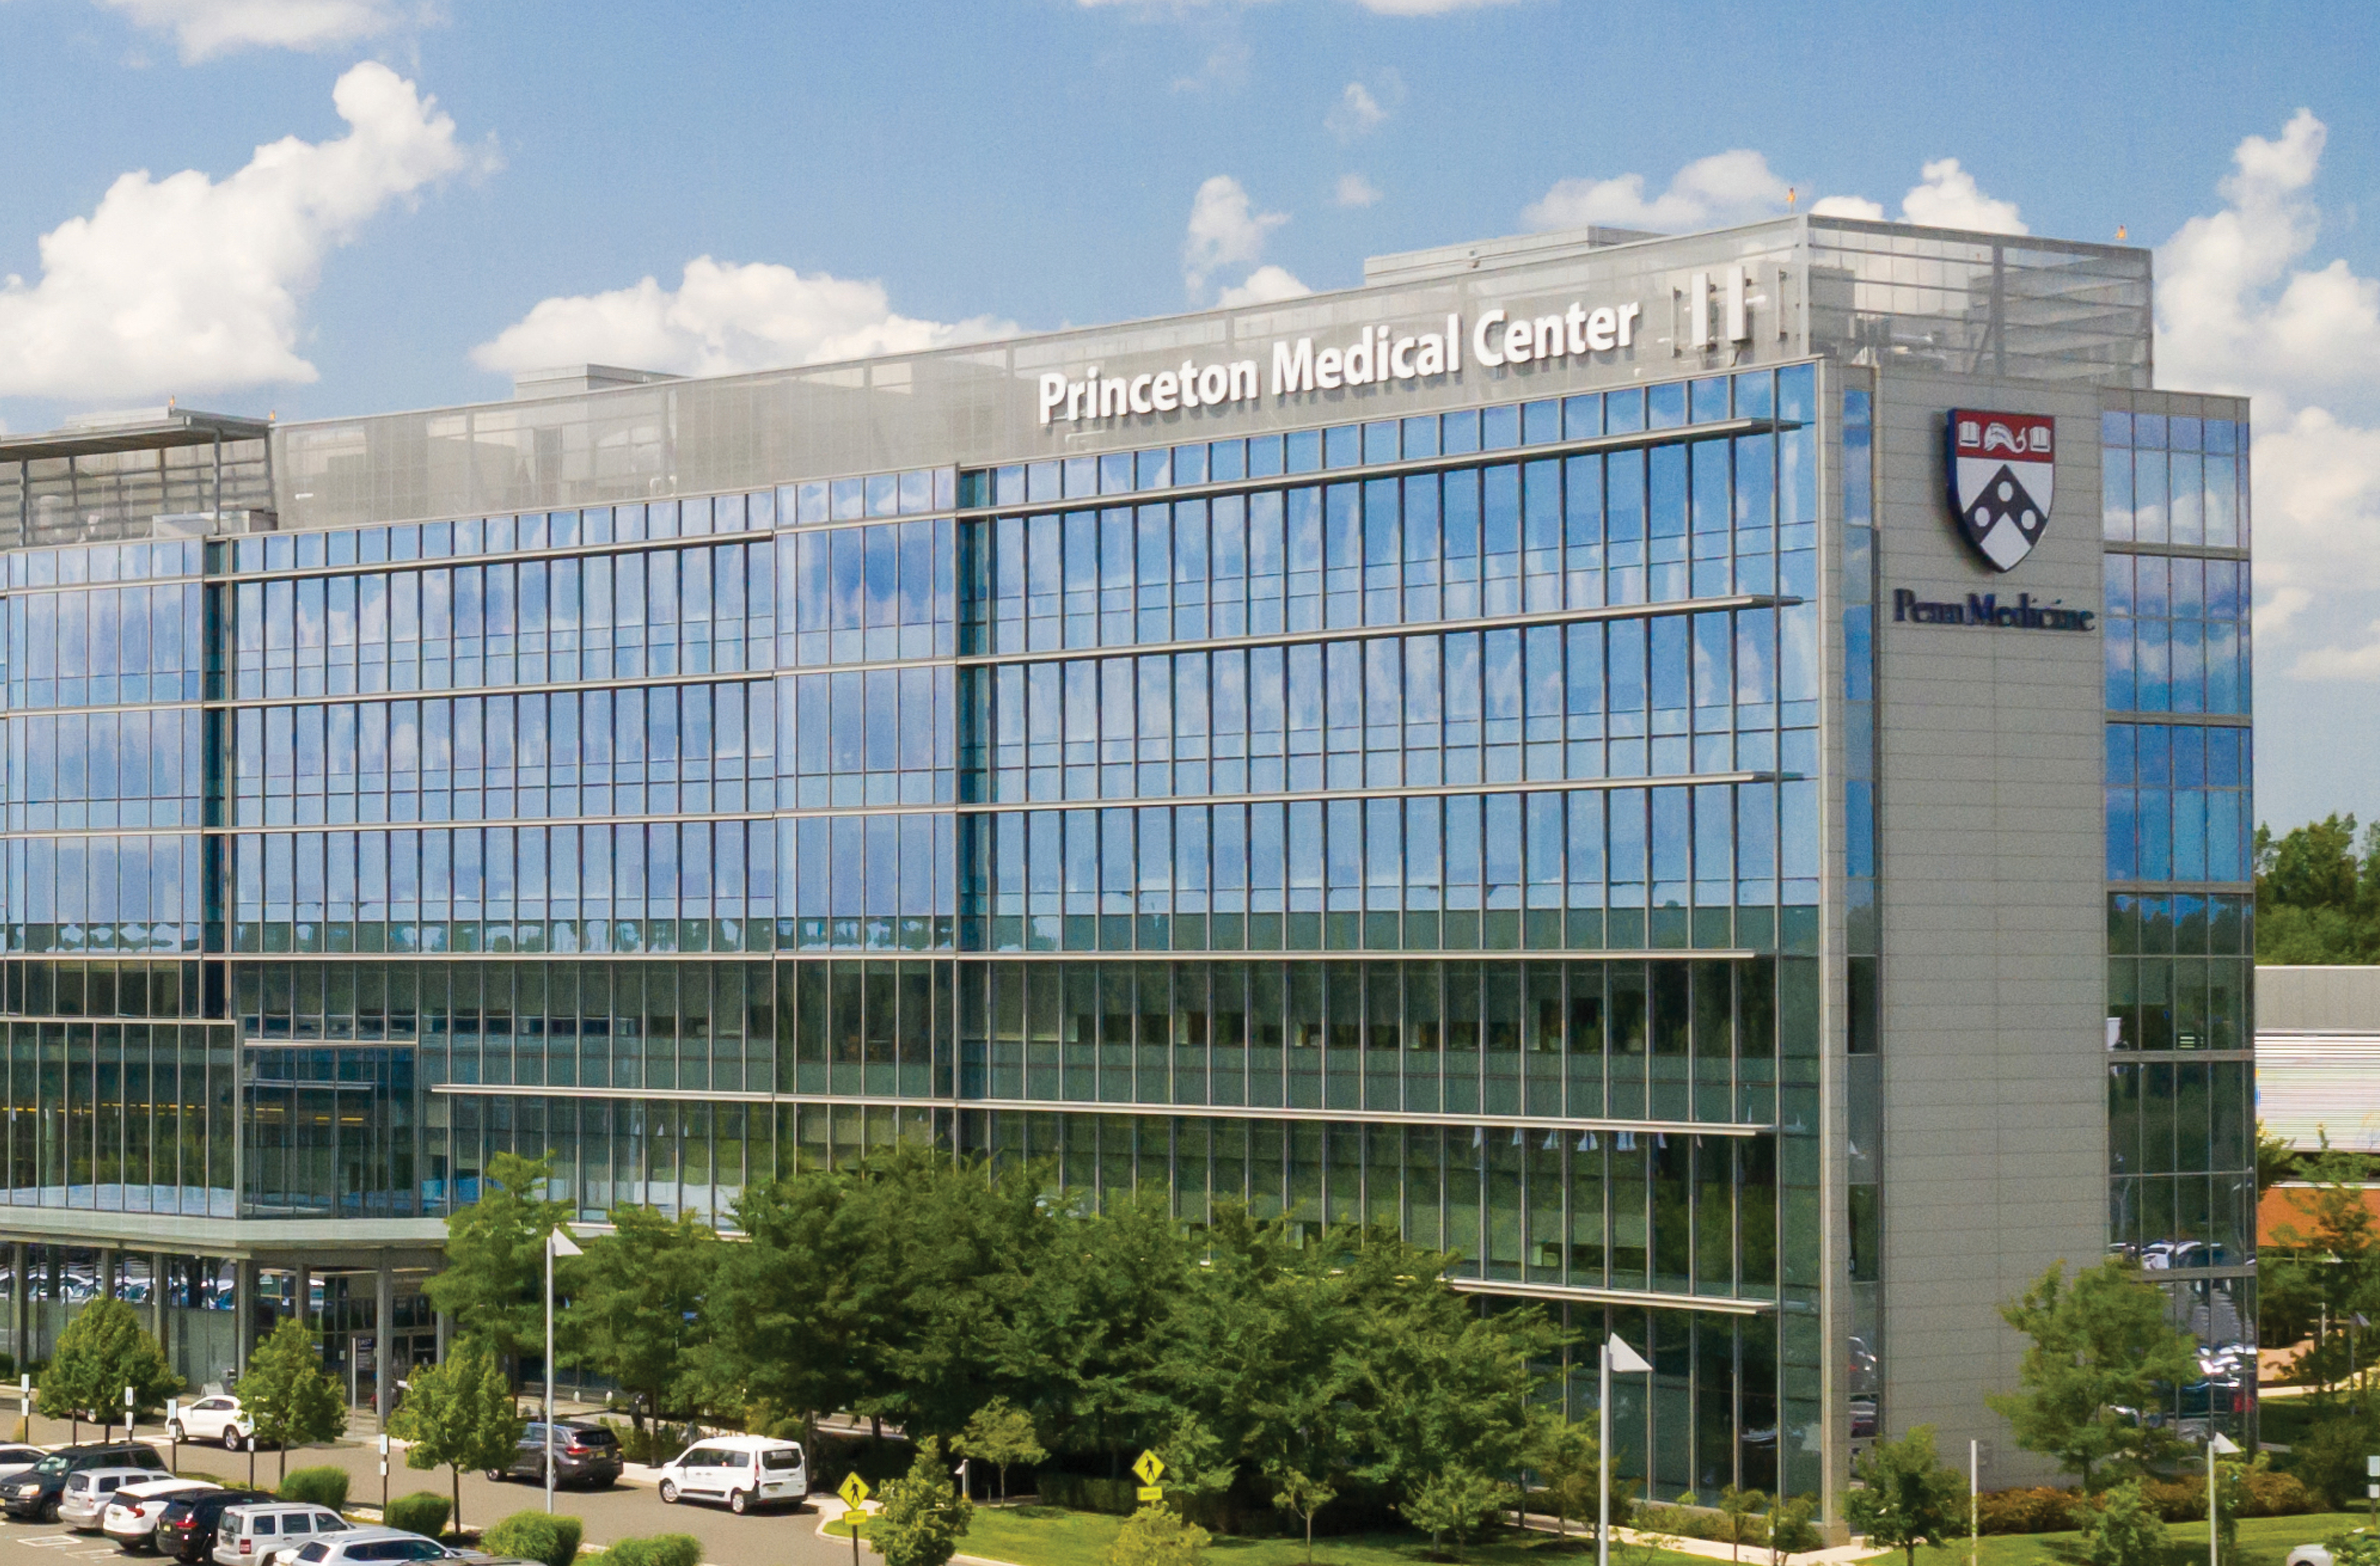 Penn Medicine Princeton Medical Center was named a Best Regional Hospital in central New Jersey.